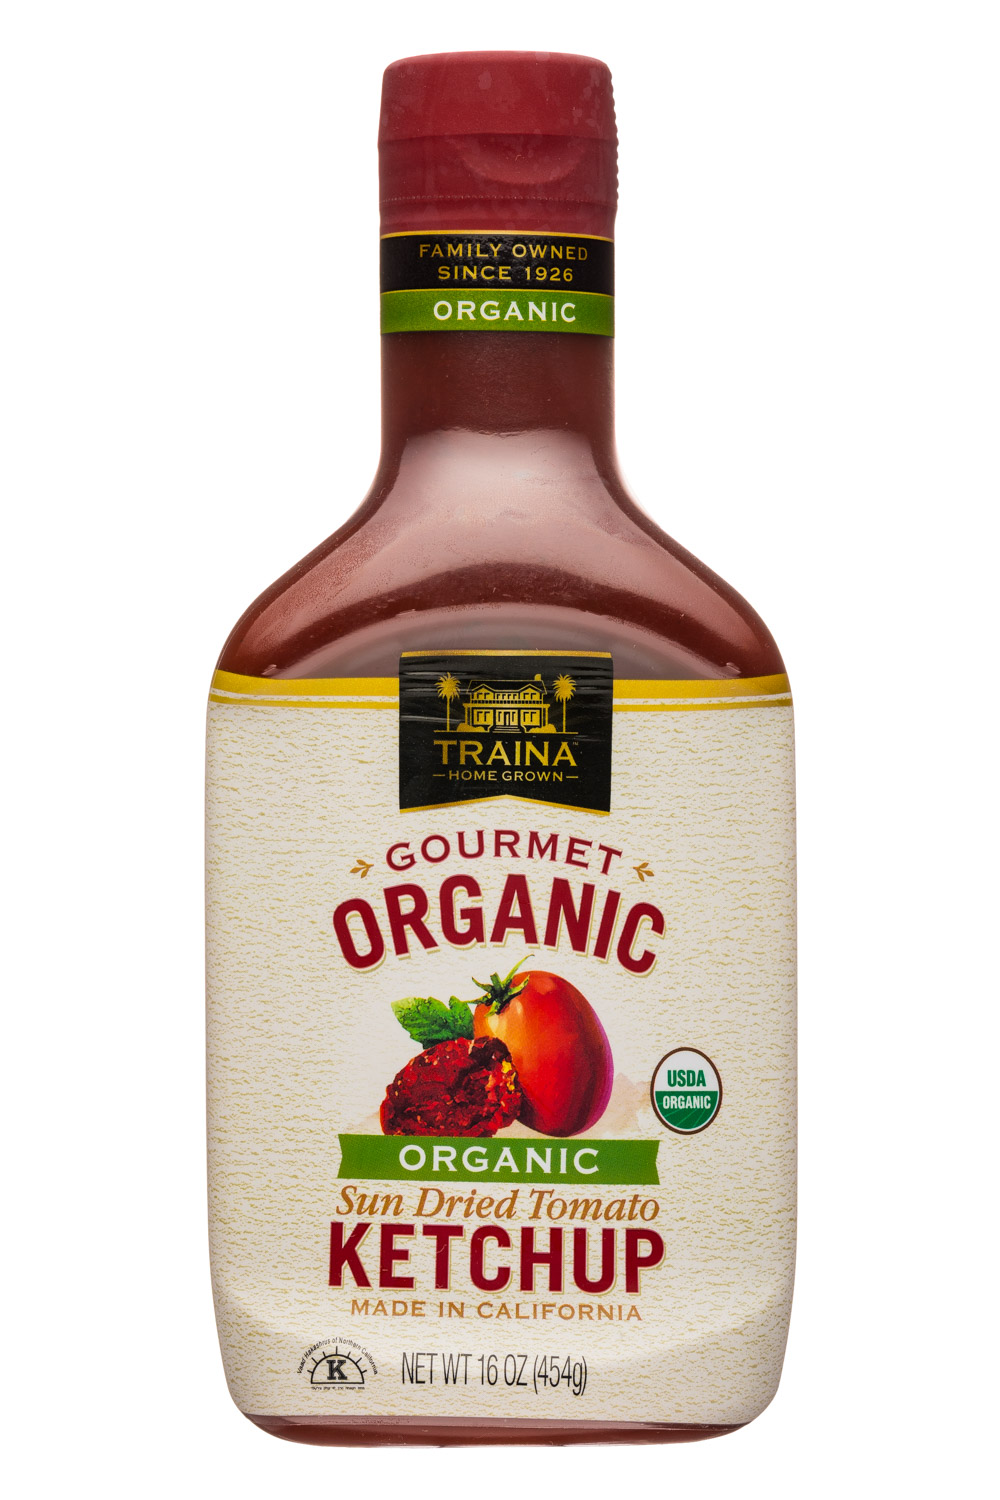 Gourmet Organic Ketchup